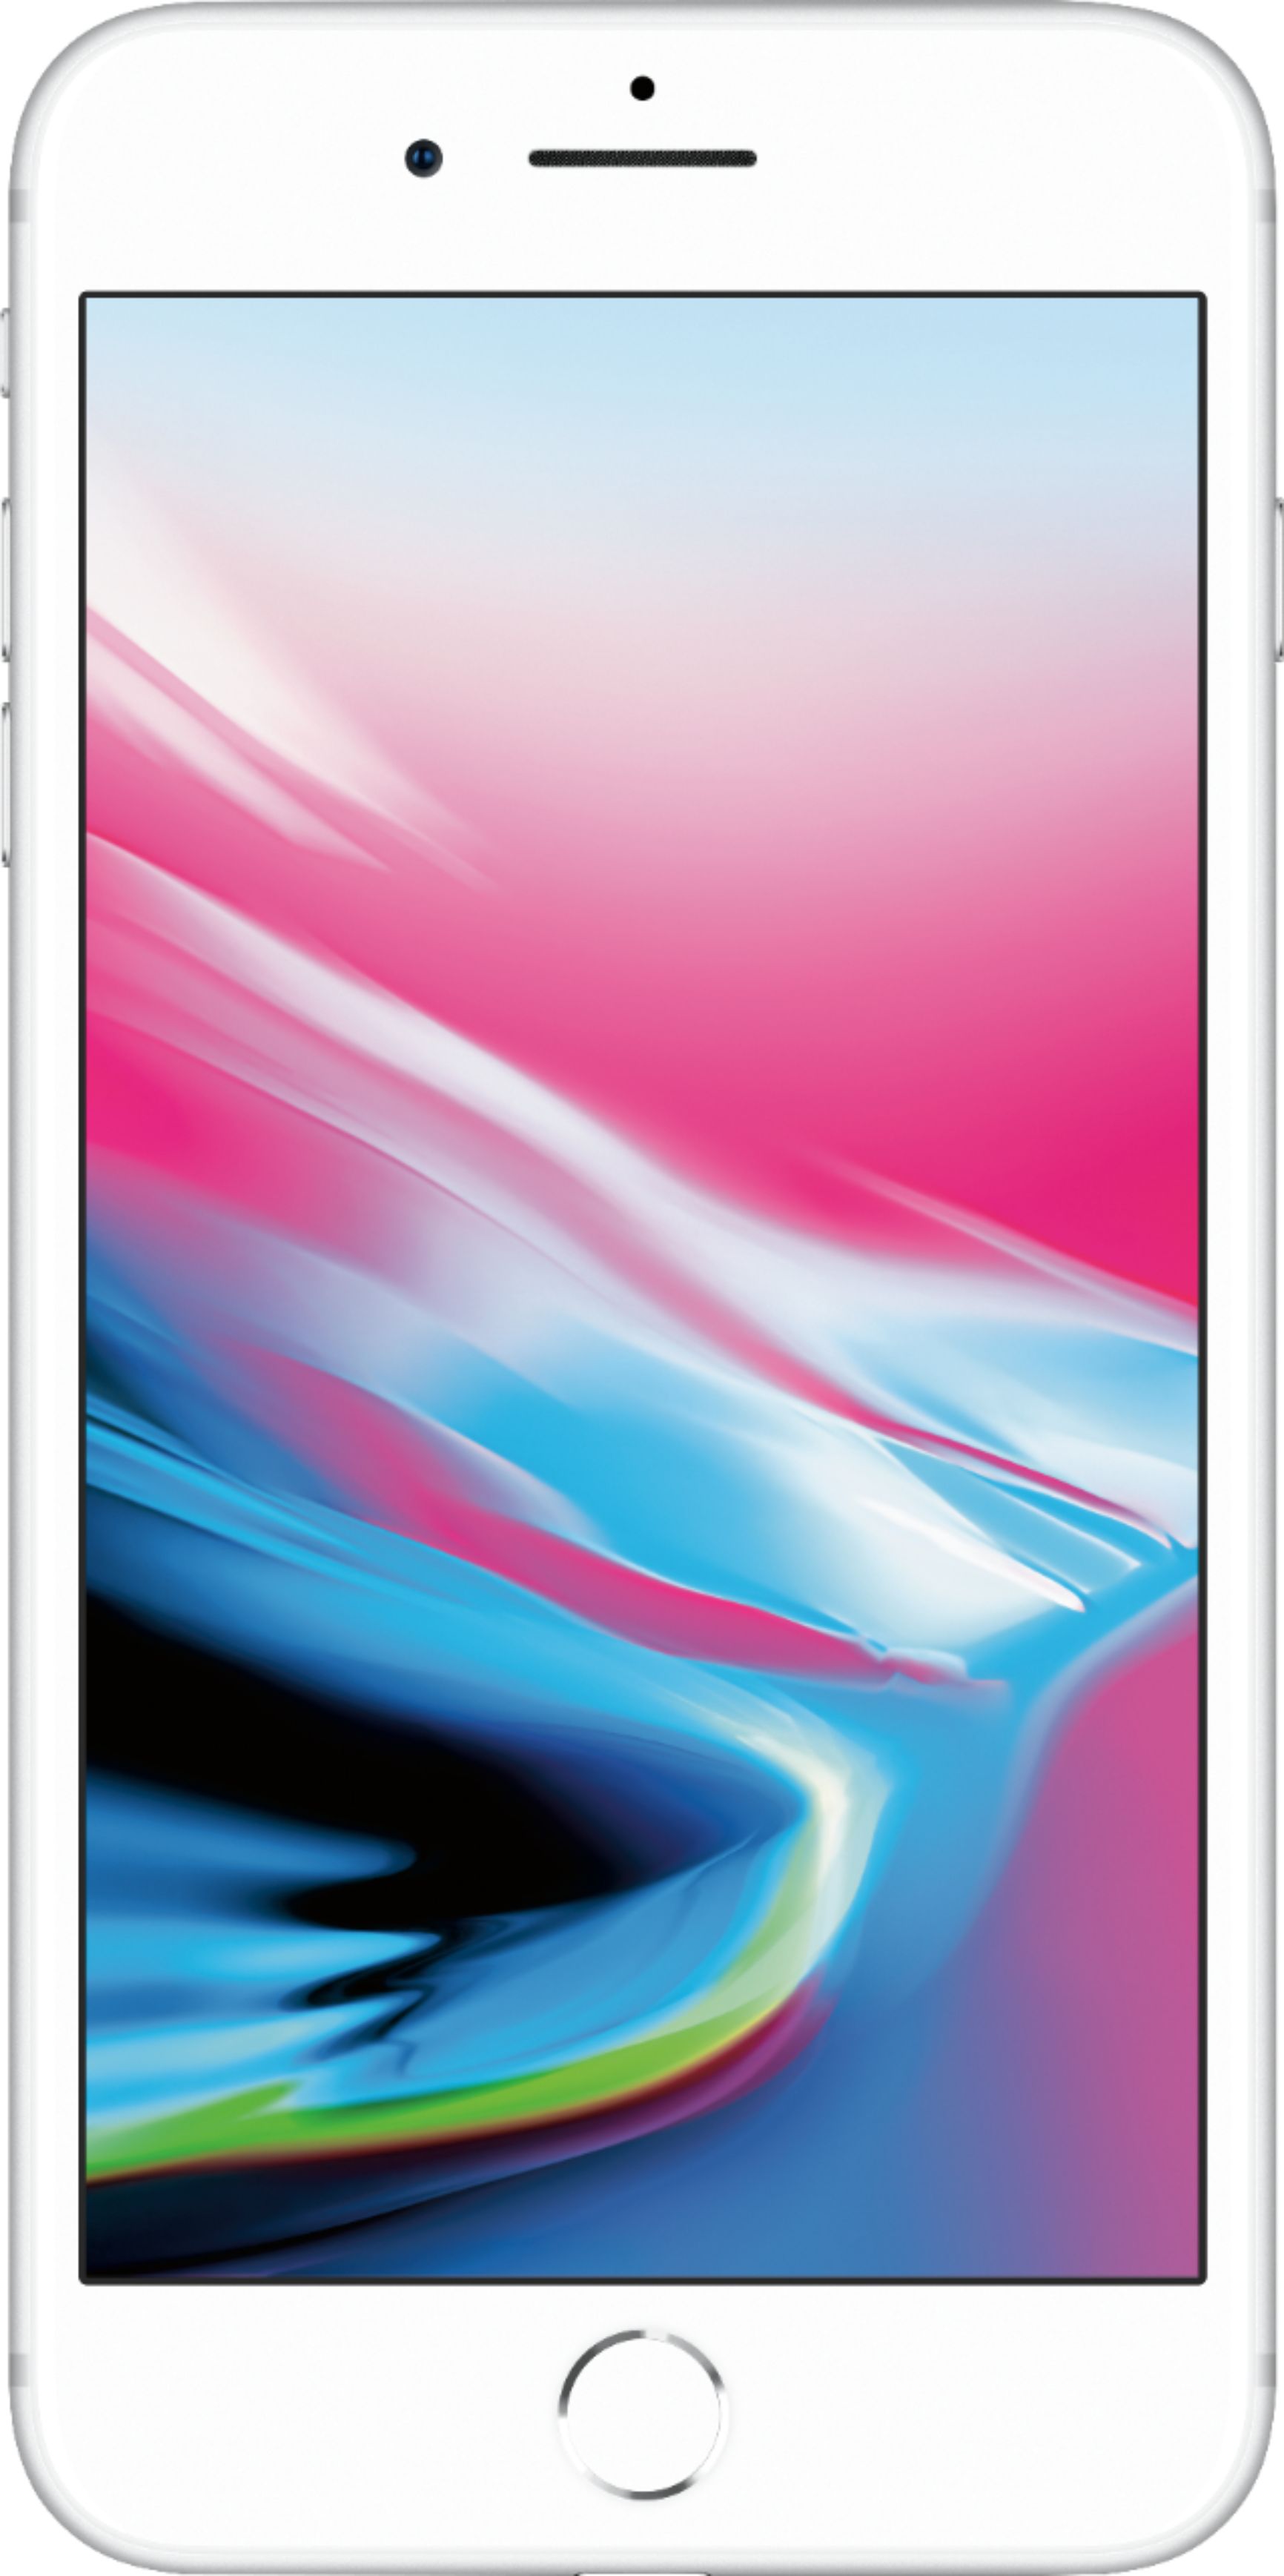 Apple iPhone 8 Plus 64GB Silver (Sprint) MQ8E2LL/A - Best Buy